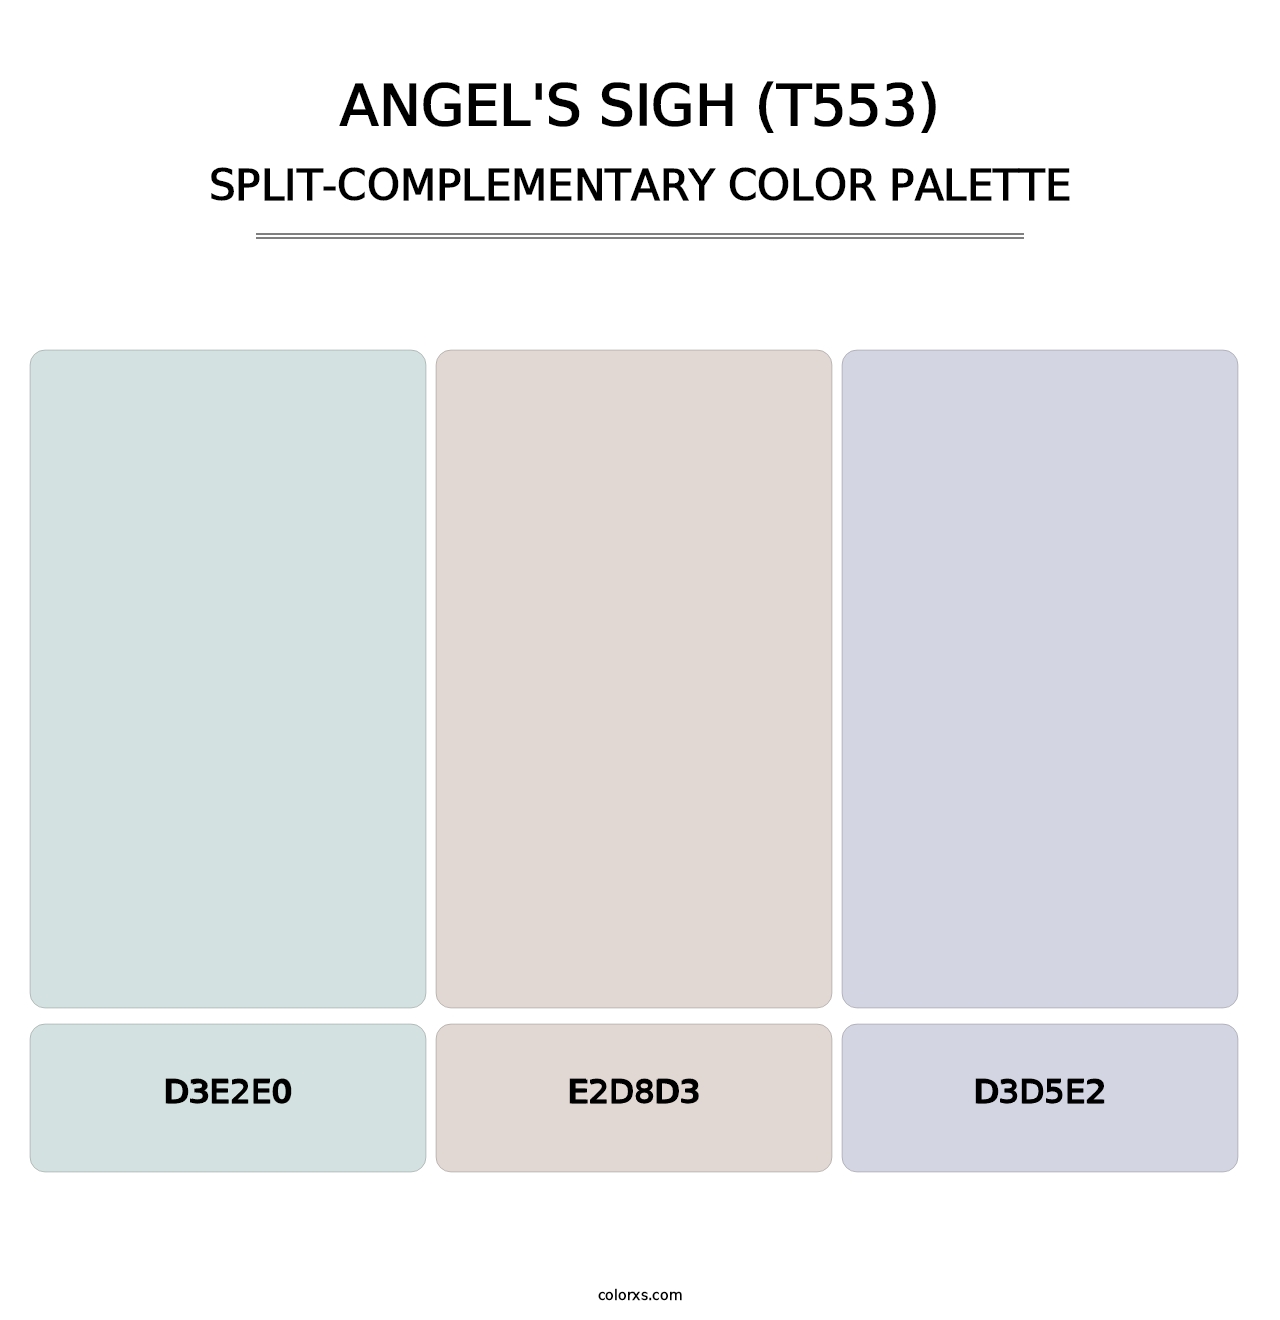 Angel's Sigh (T553) - Split-Complementary Color Palette